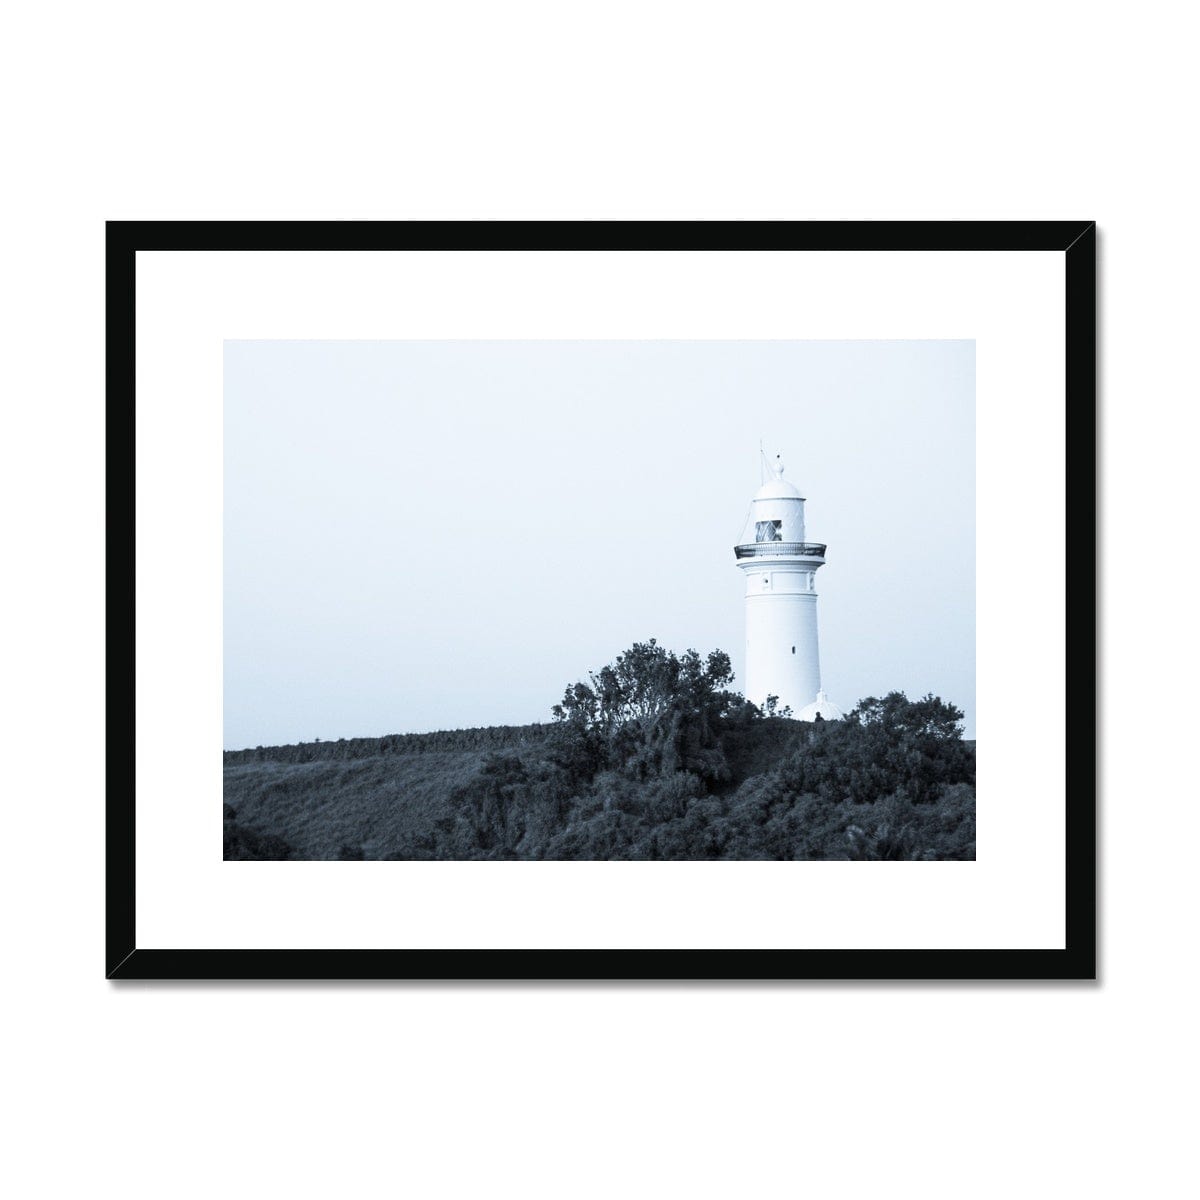 Adam Davies Framed 12"x8" (30.48x20.32cm) / Black Frame Macquarie Lighthouse Vaucluse Framed Print